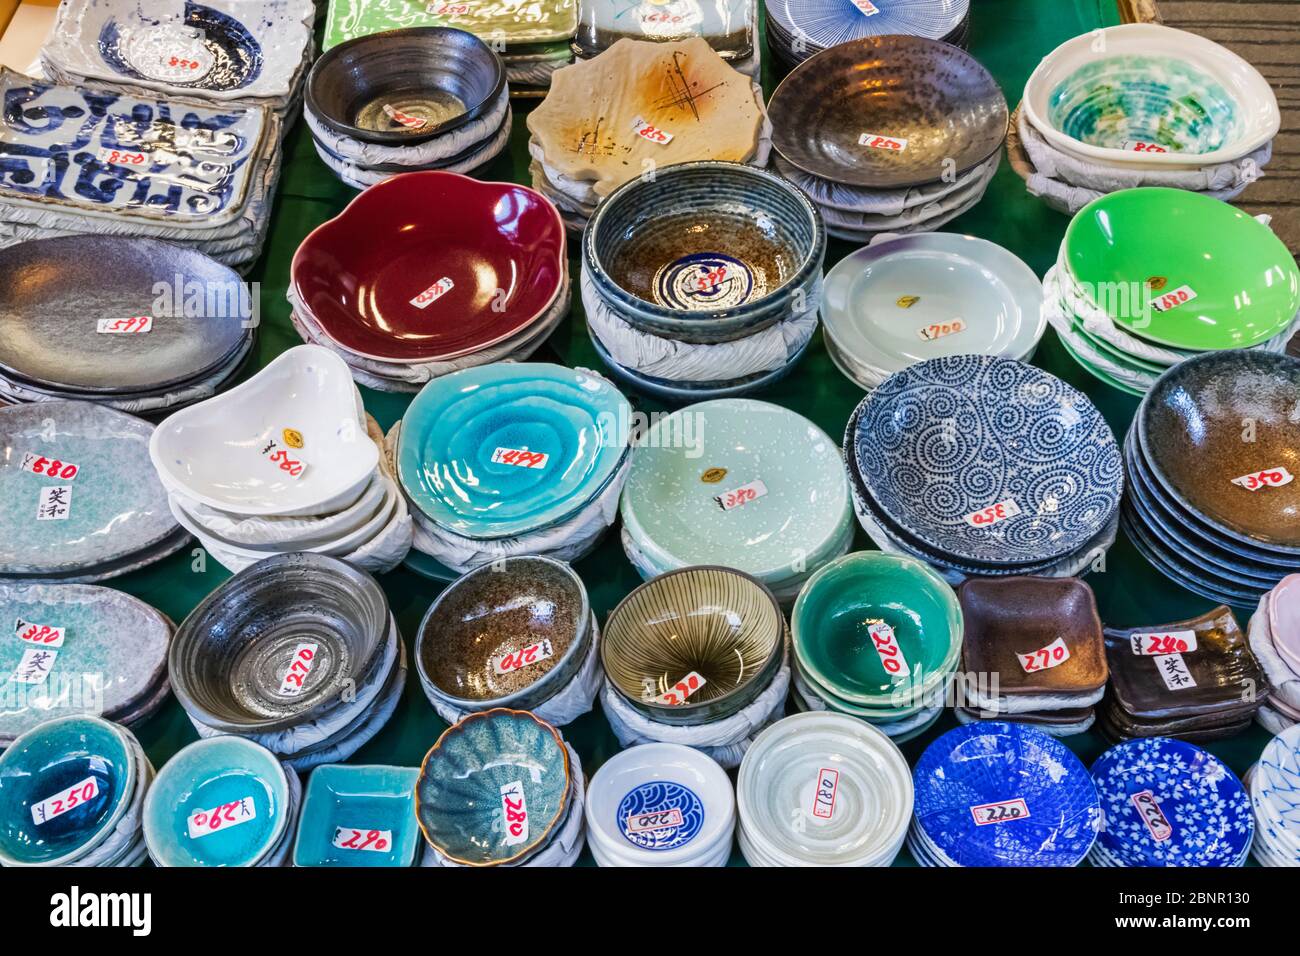 Japan, Honshu, Tokyo, Tsukiji, Tsukiji Outer Market, Kitchenware Shop Display of Japanese Crockery Stock Photo